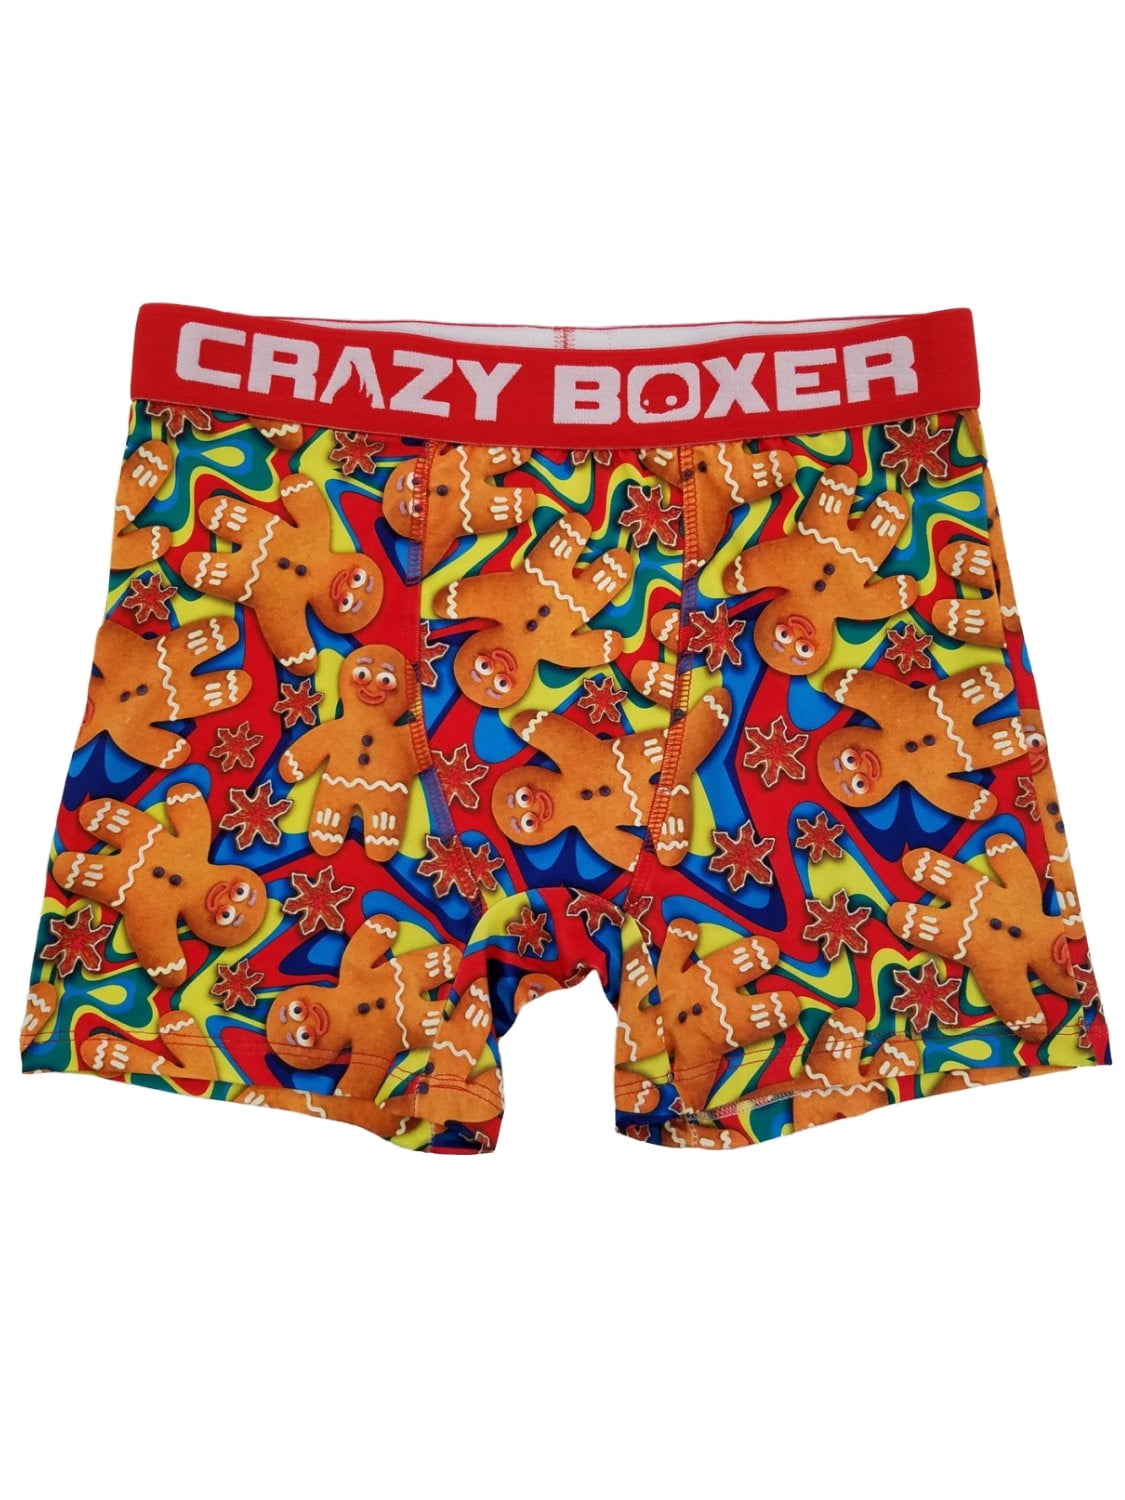 Hankey Holiday Themed Underwear Boxer Briefs XLarge 40-42 South Park Mr